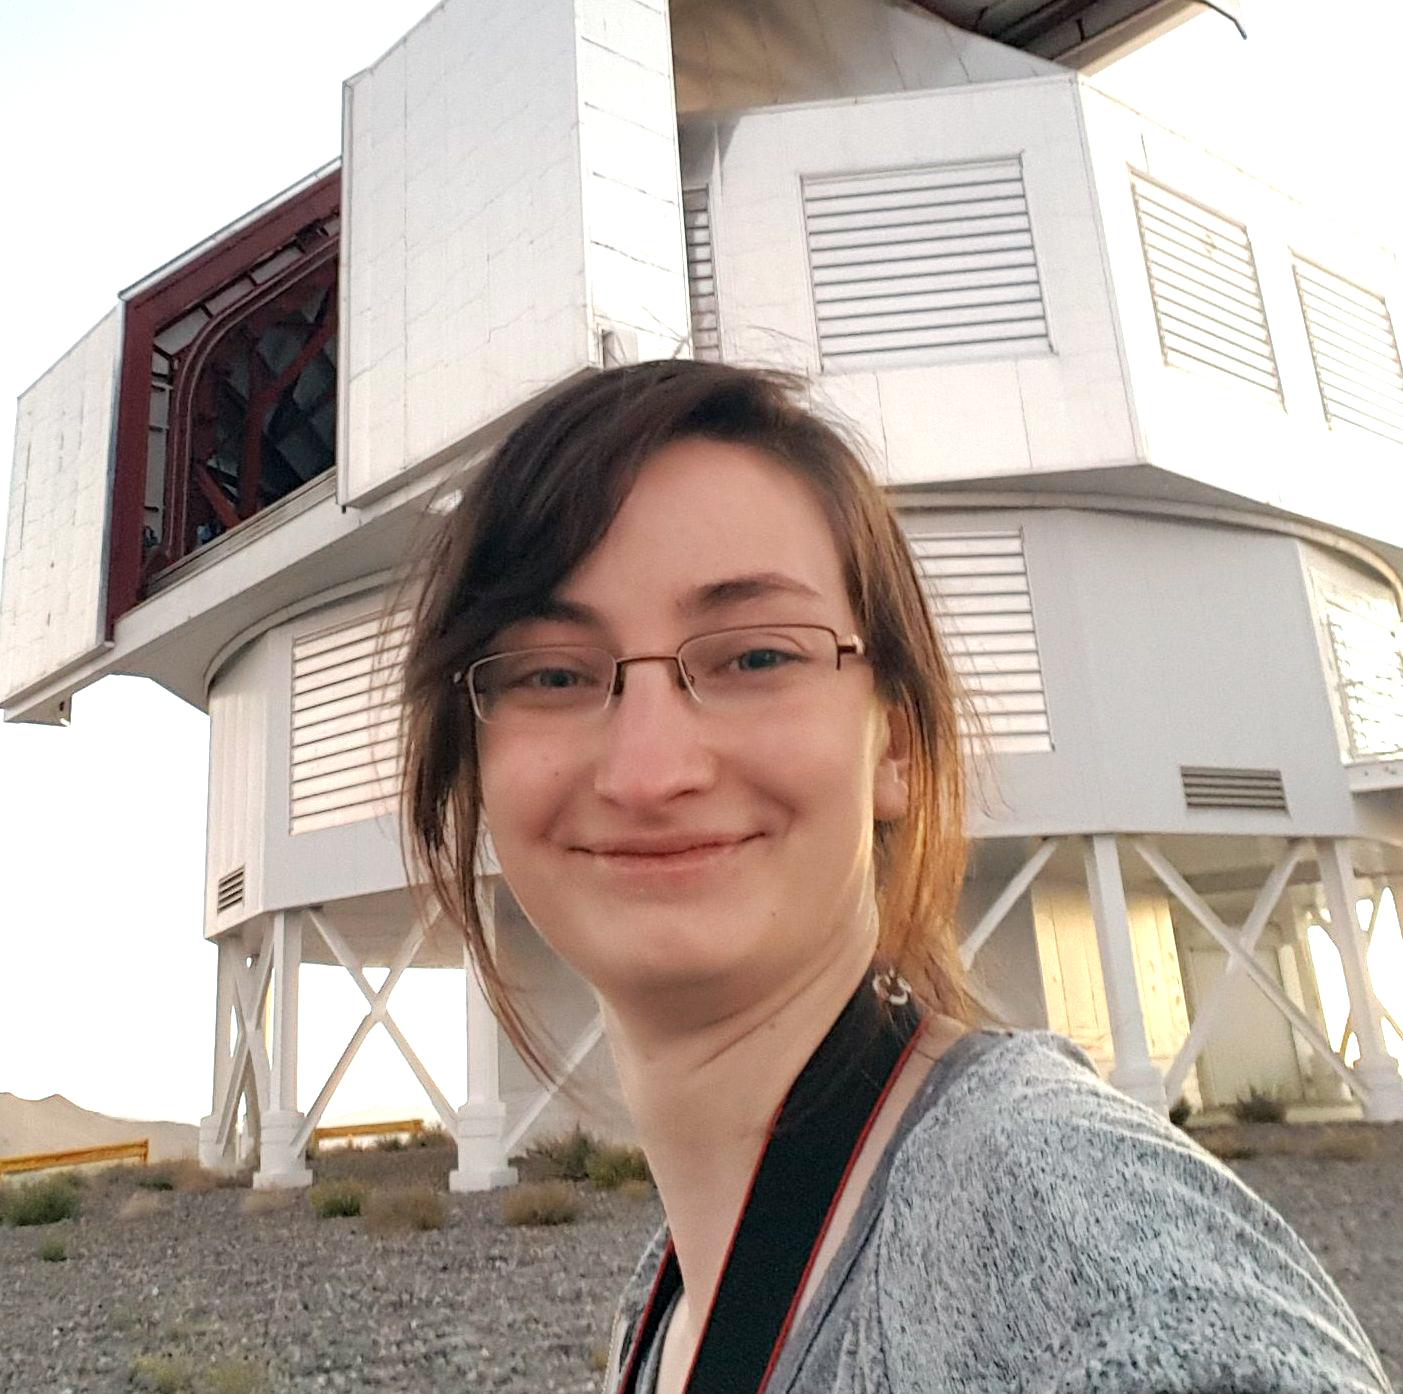 Anna O'Grady poses in front of the Magellan Telescopes.